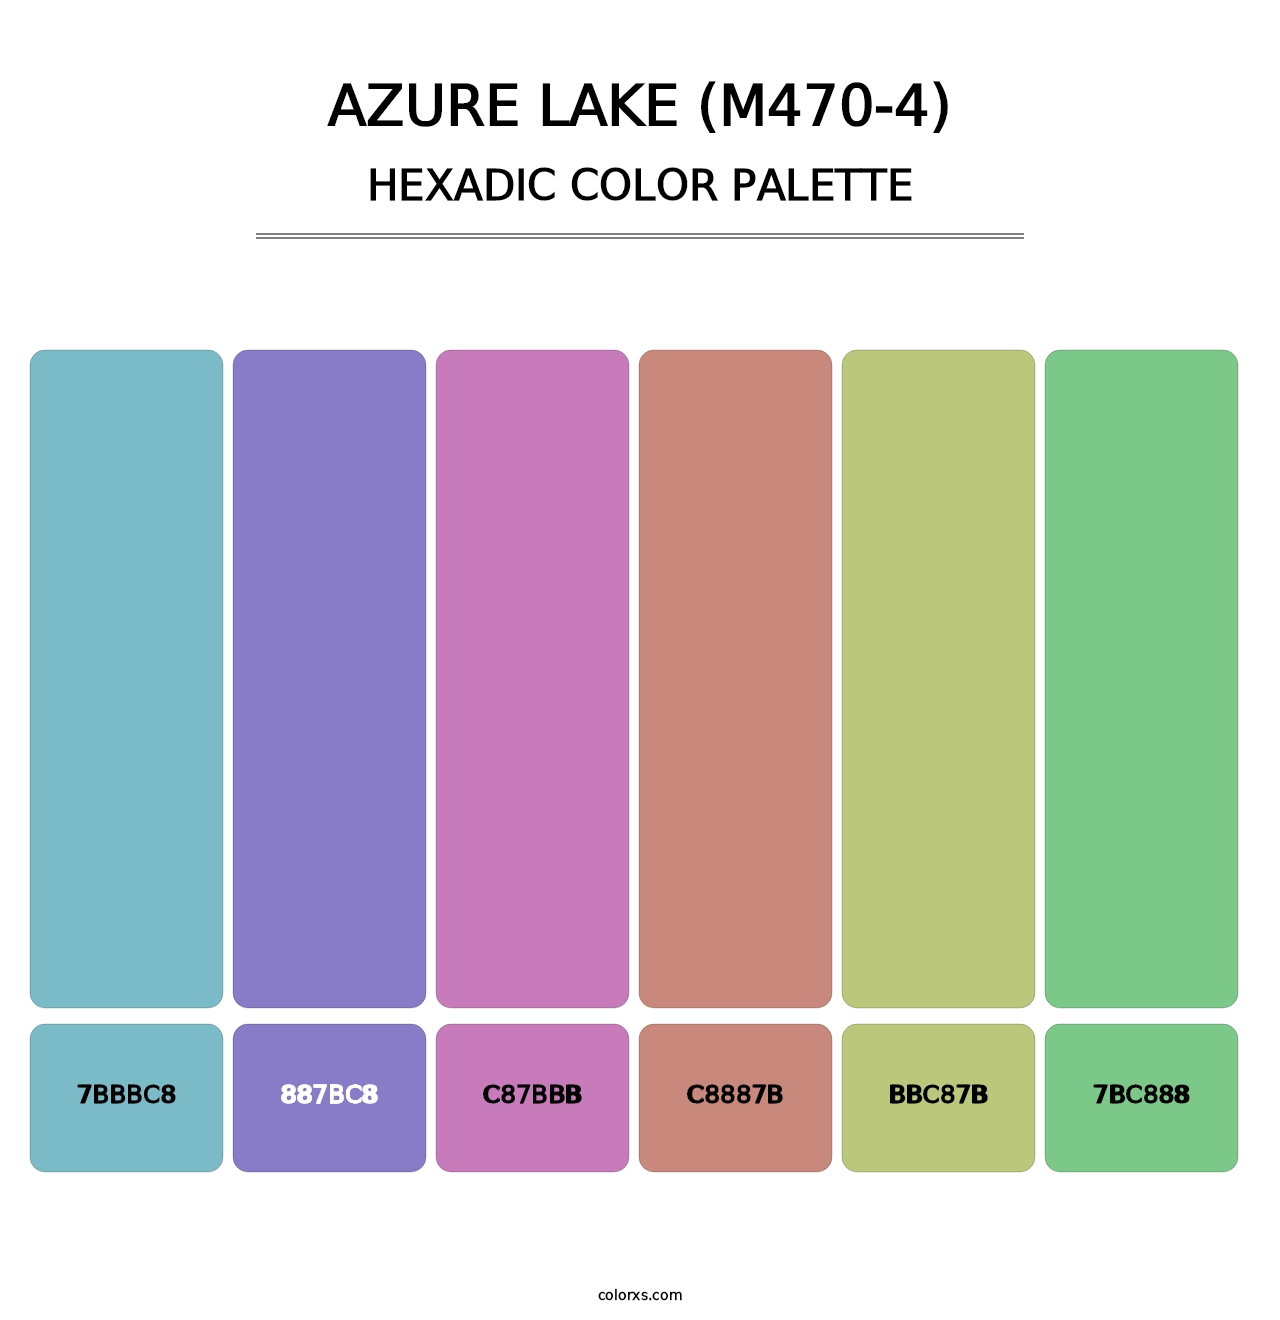 Azure Lake (M470-4) - Hexadic Color Palette